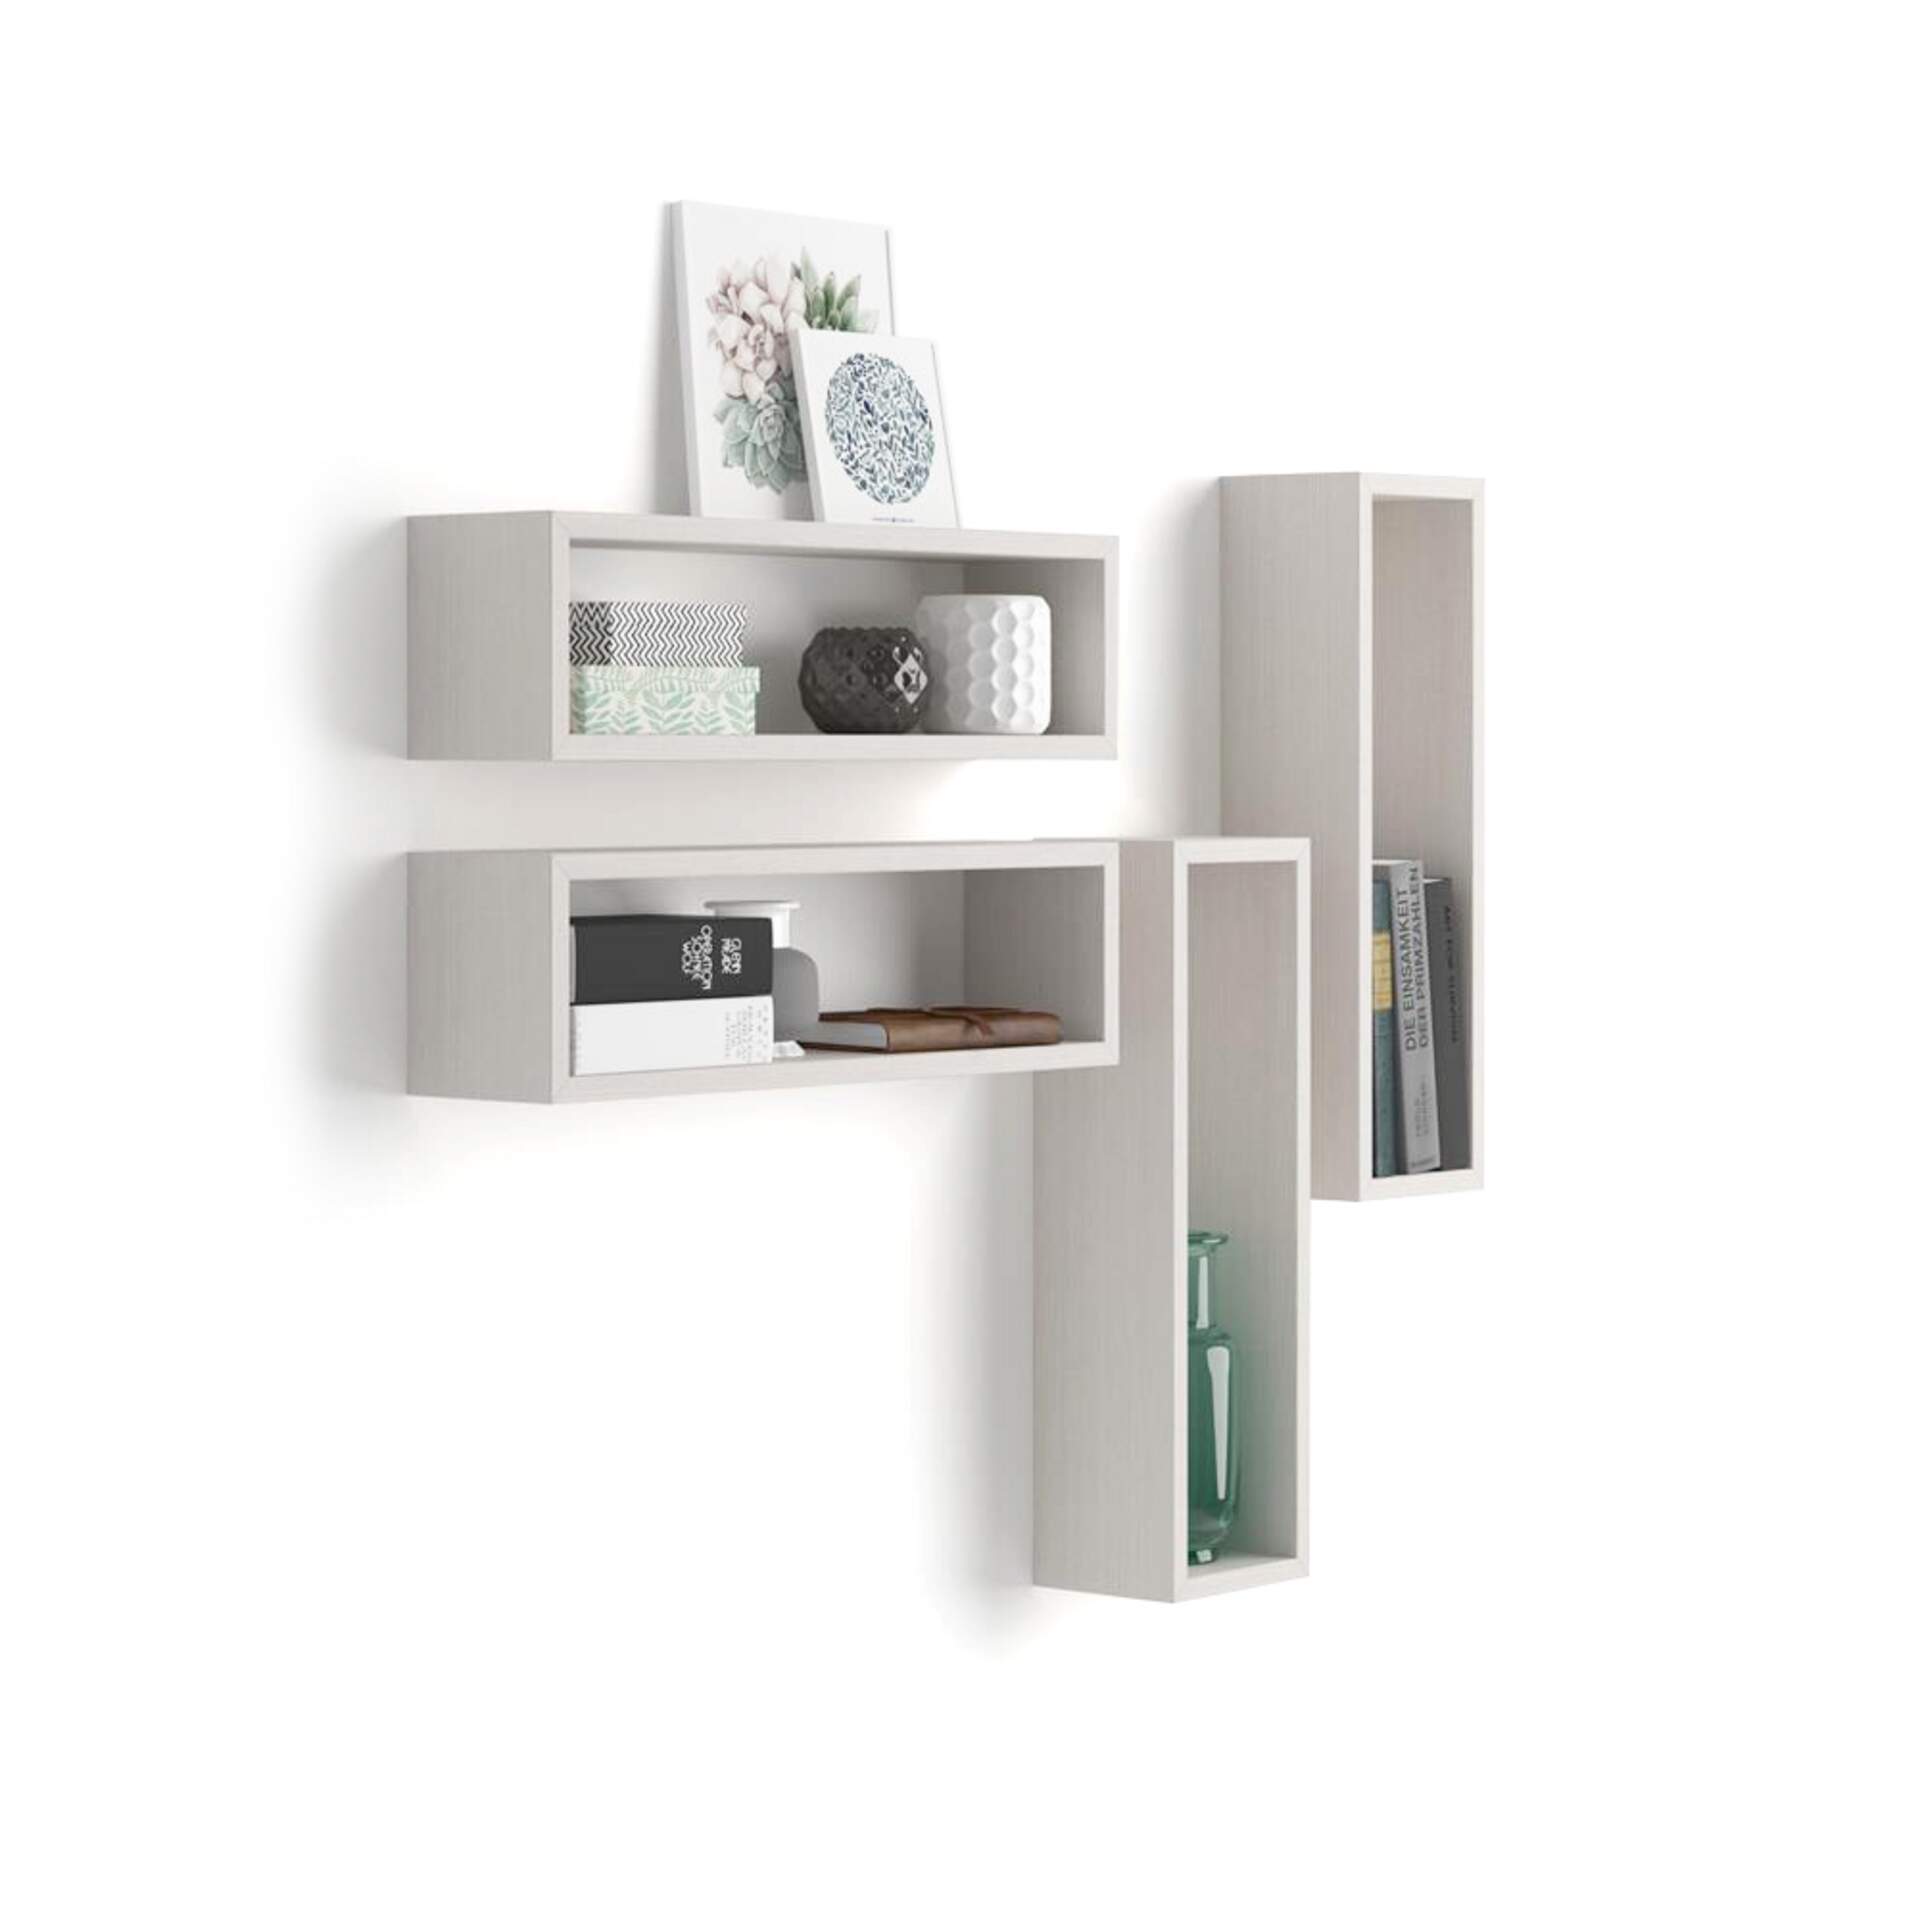 Mobili Fiver Set de 4 estantes en forma de cubo Iacopo, color Fresno blanco